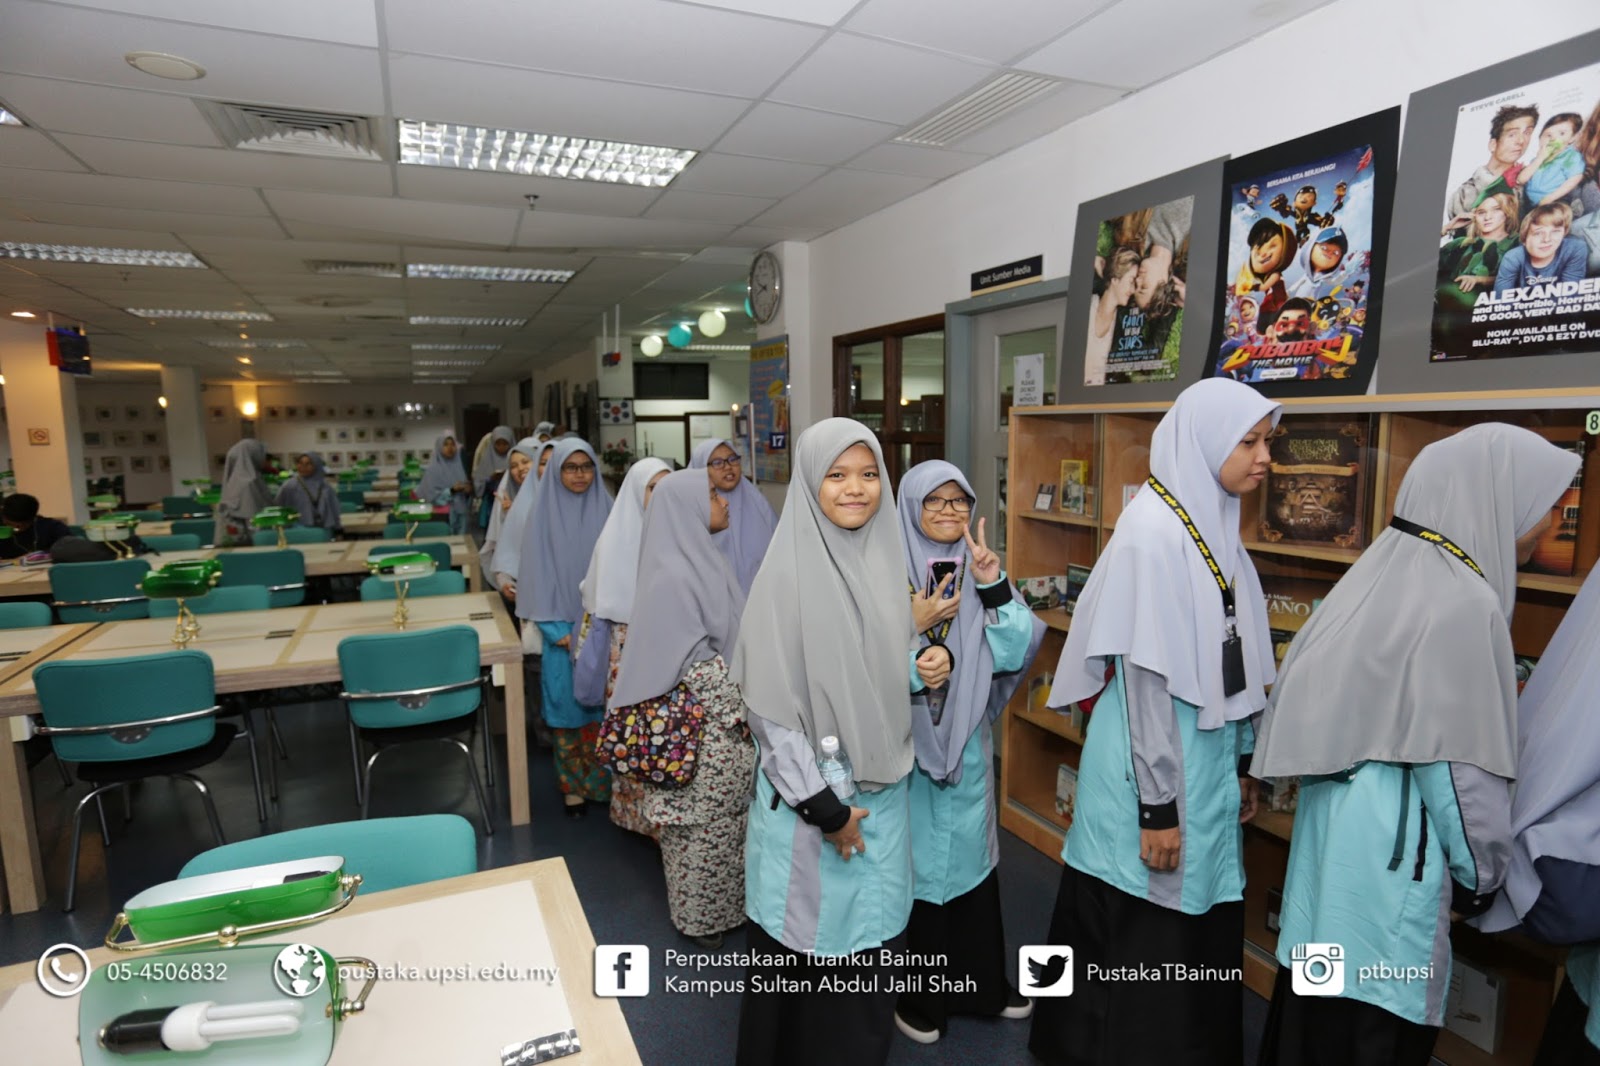 Lawatan Sekolah Agama Menengah Tinggi Sultan Hisamuddin Klang Selangor More Info Perpustakaan Tuanku Bainun